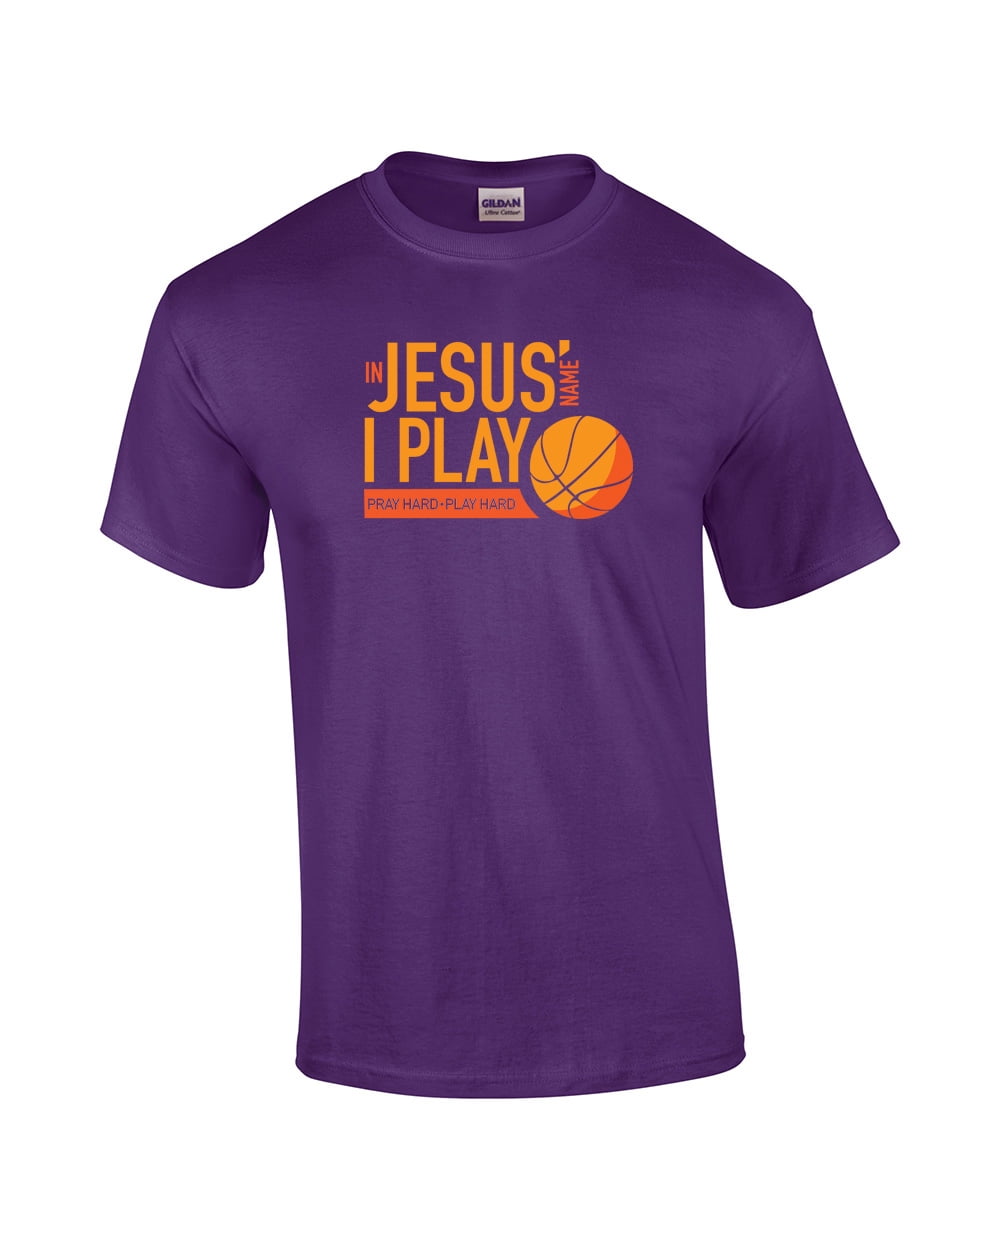 In Jesus Name I Play Christian Short Sleeve T Shirt Purple Xxl Walmart Com